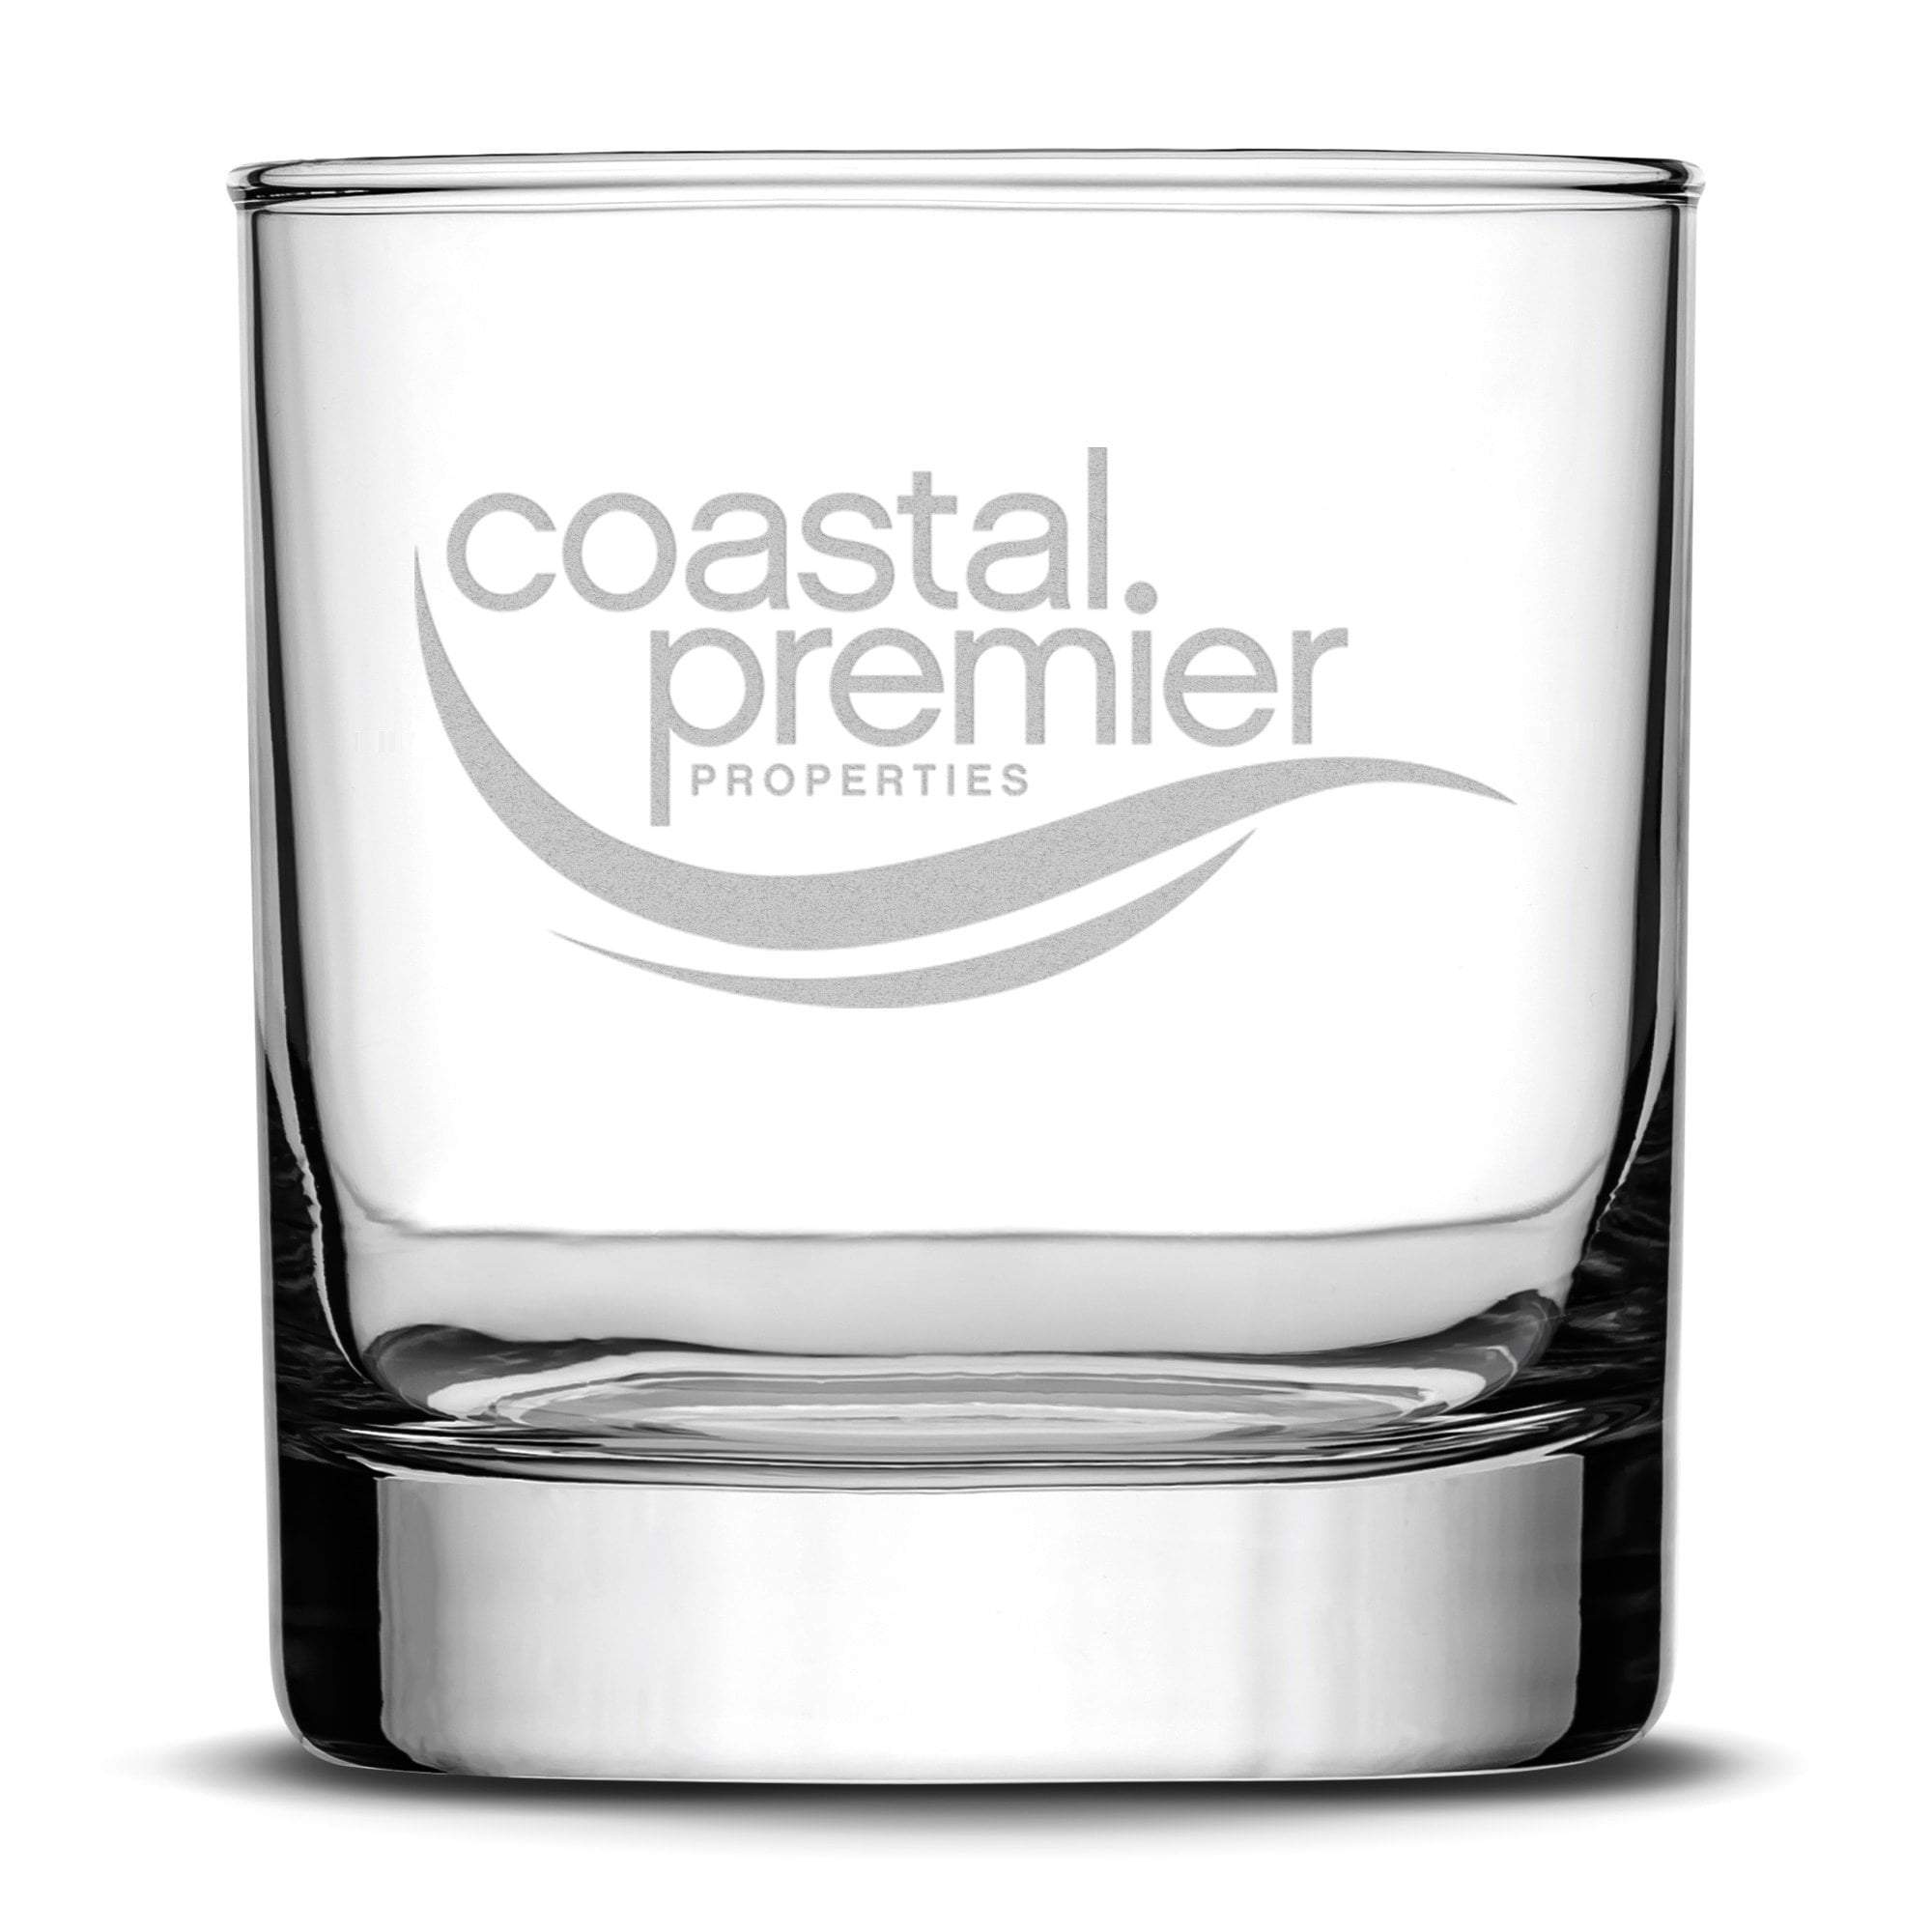 Coastal Premier Properties Whiskey Rocks Glass, 10oz Integrity Bottles